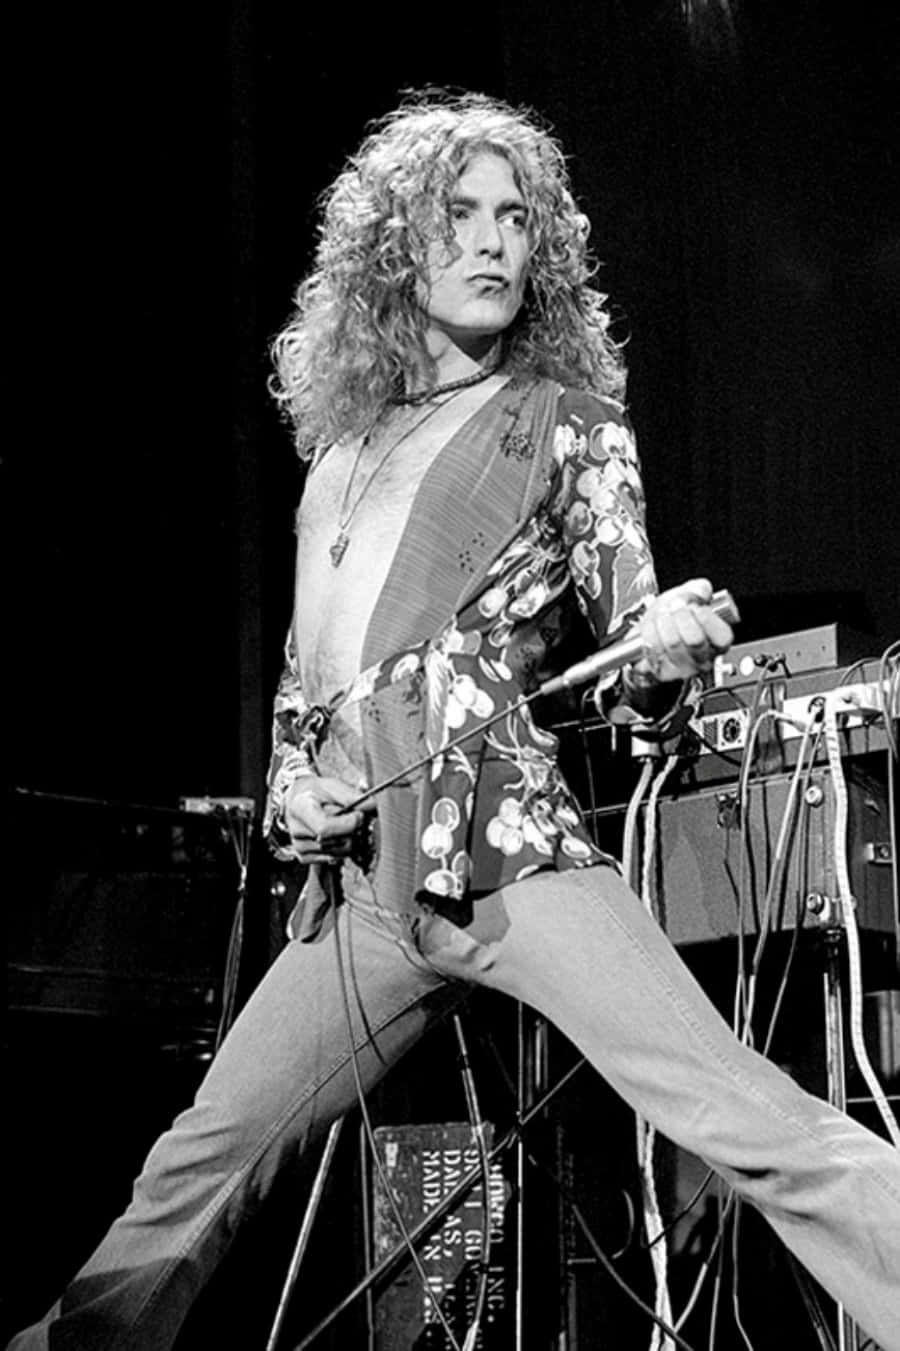 Legendary rock-n-roll vocalist Robert Plant